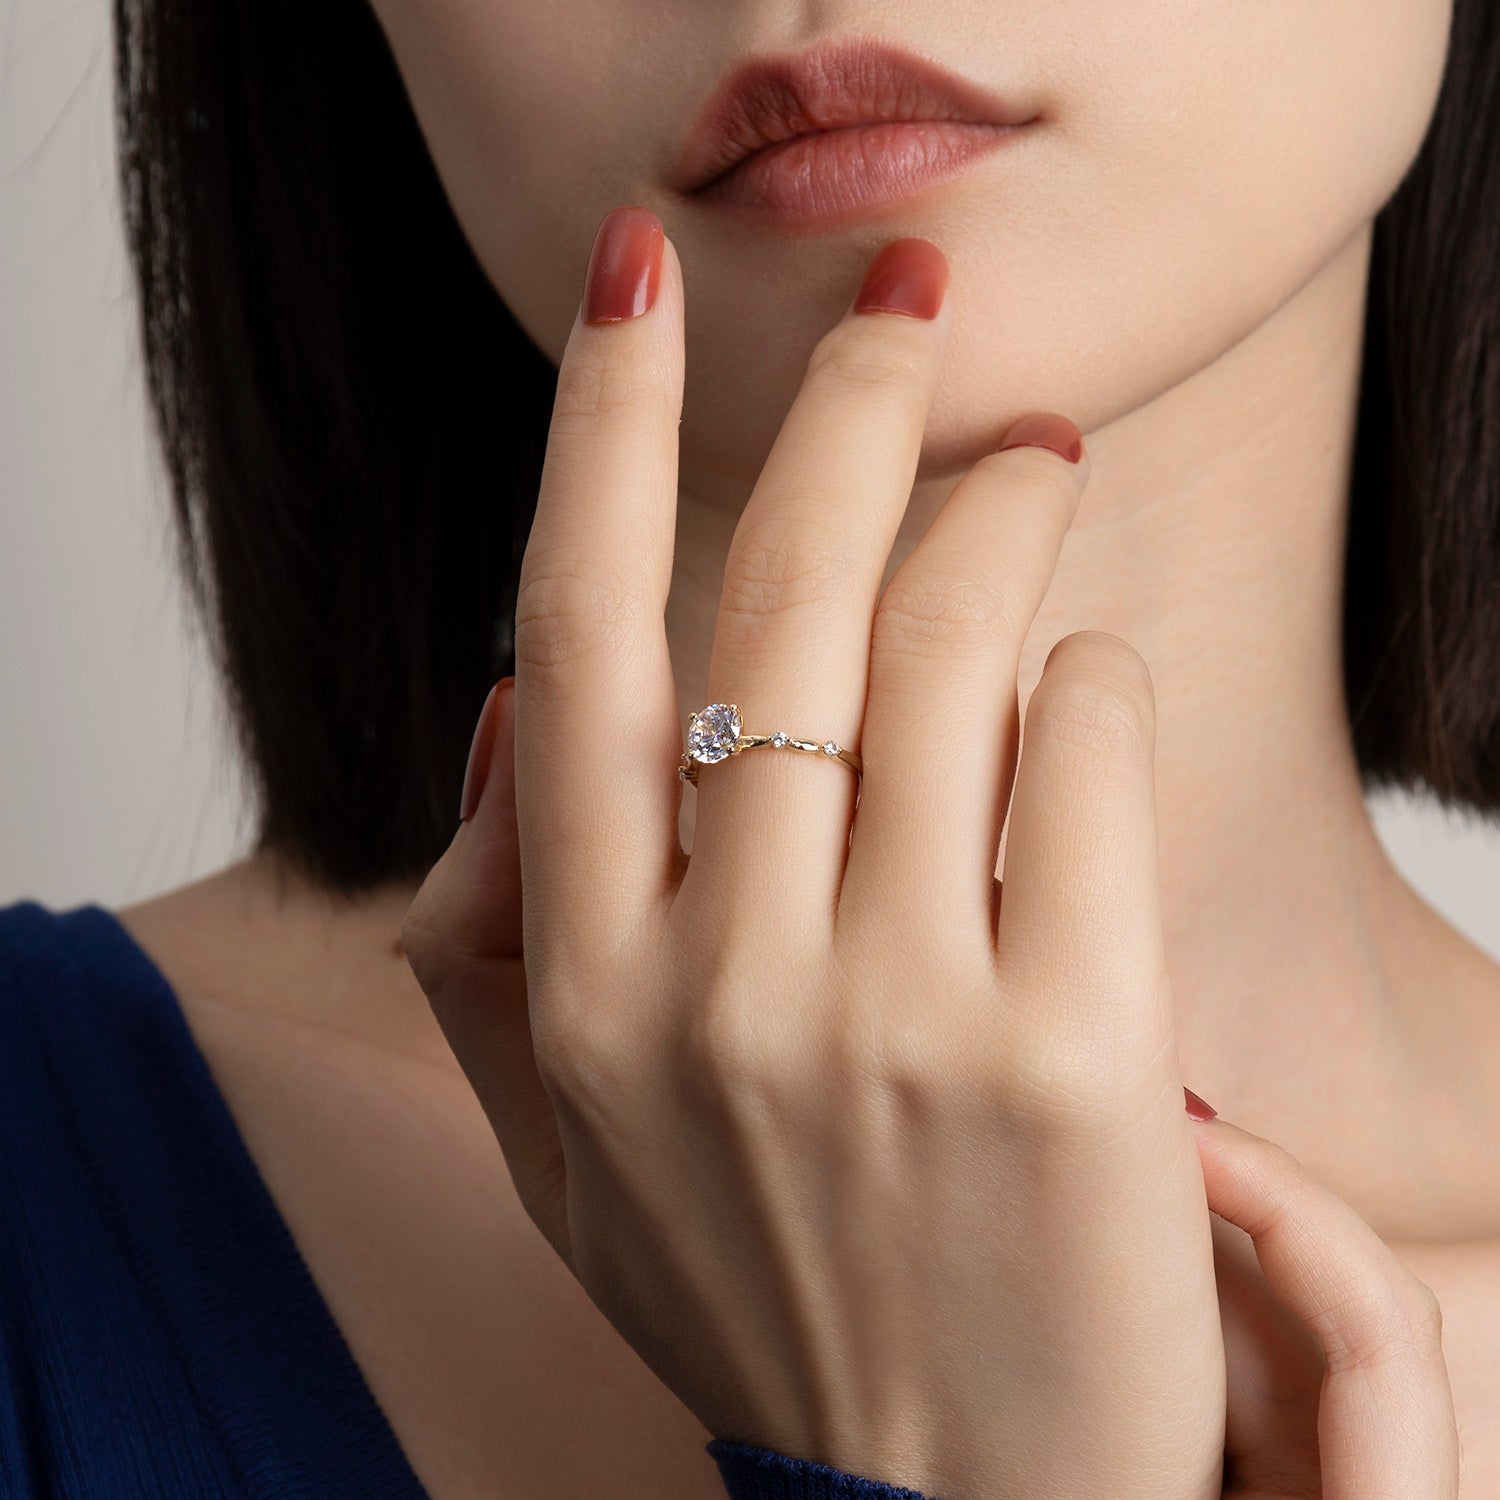 Dissoo® Round Cut Versailles Moissanite Engagement Wedding Ring in Gold Vermeil